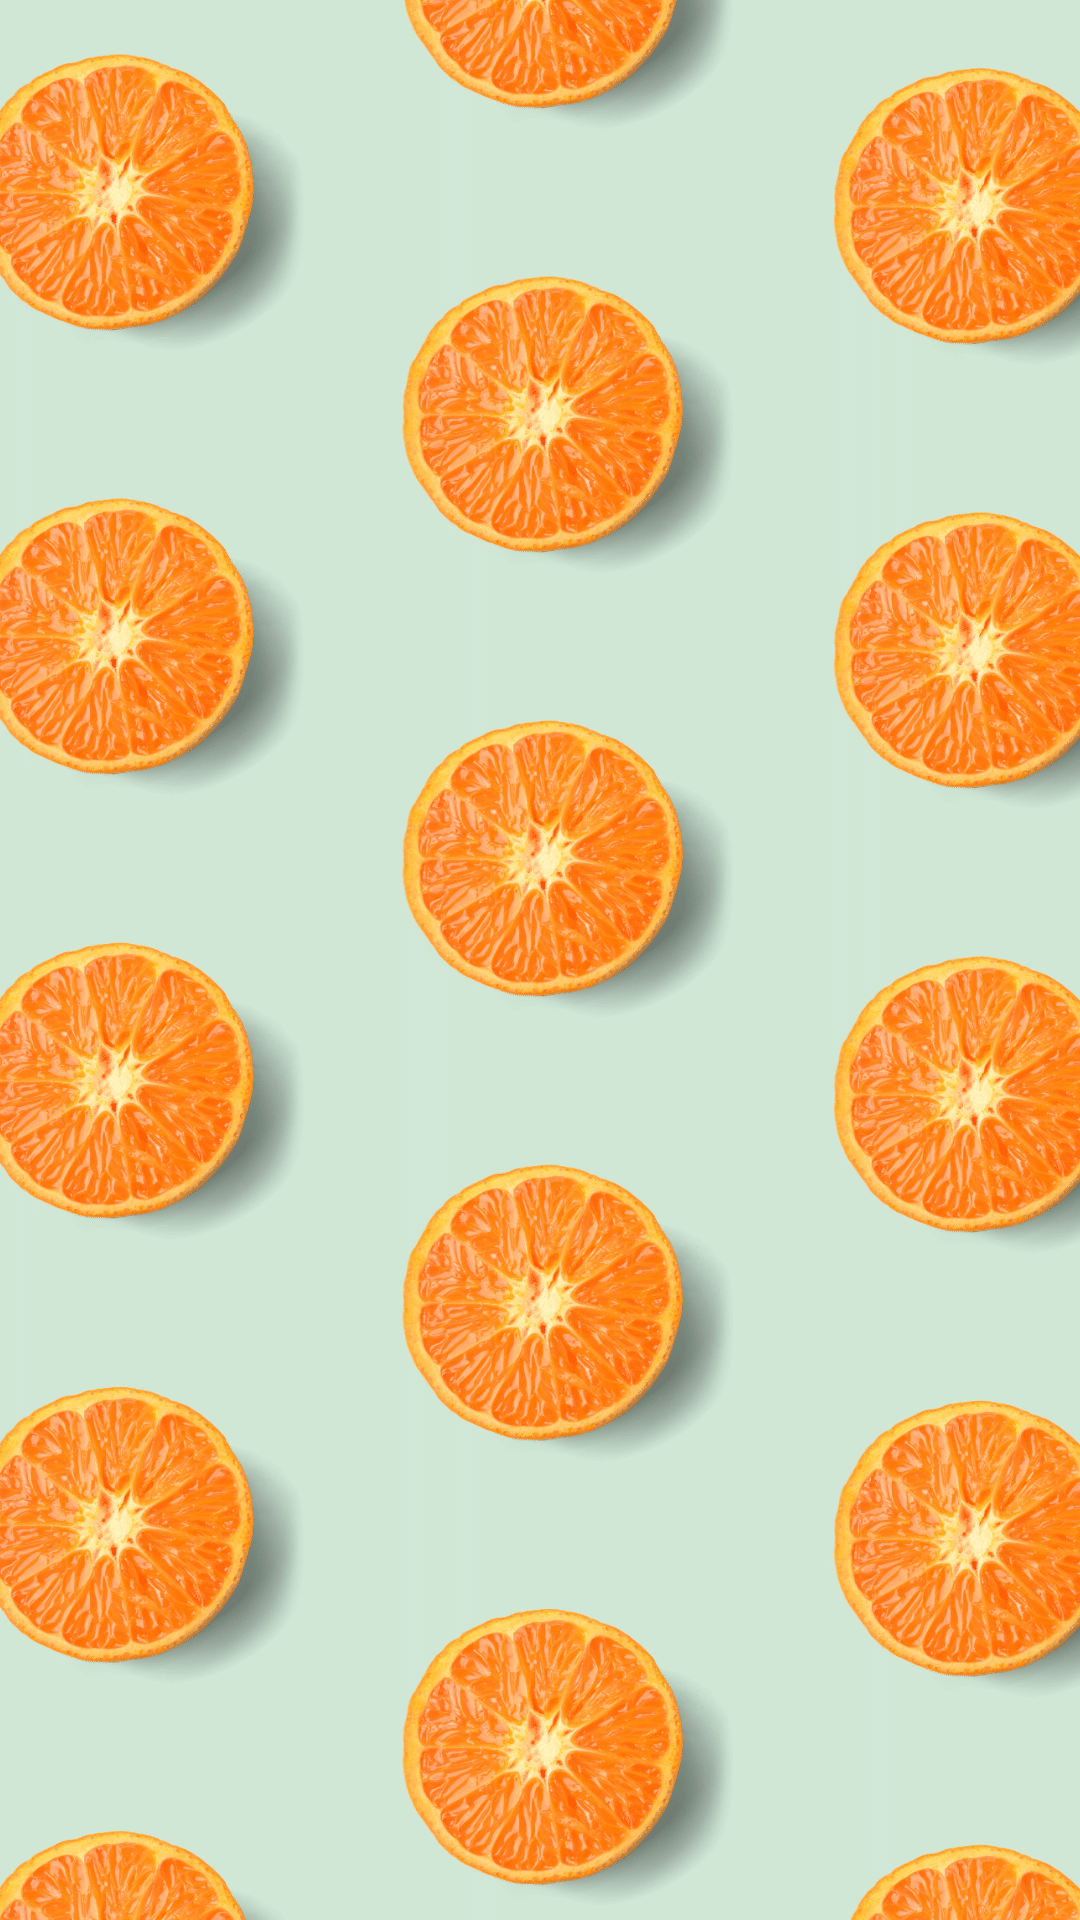 HD wallpaper orange fruits computer desktop background healthy eating   Wallpaper Flare